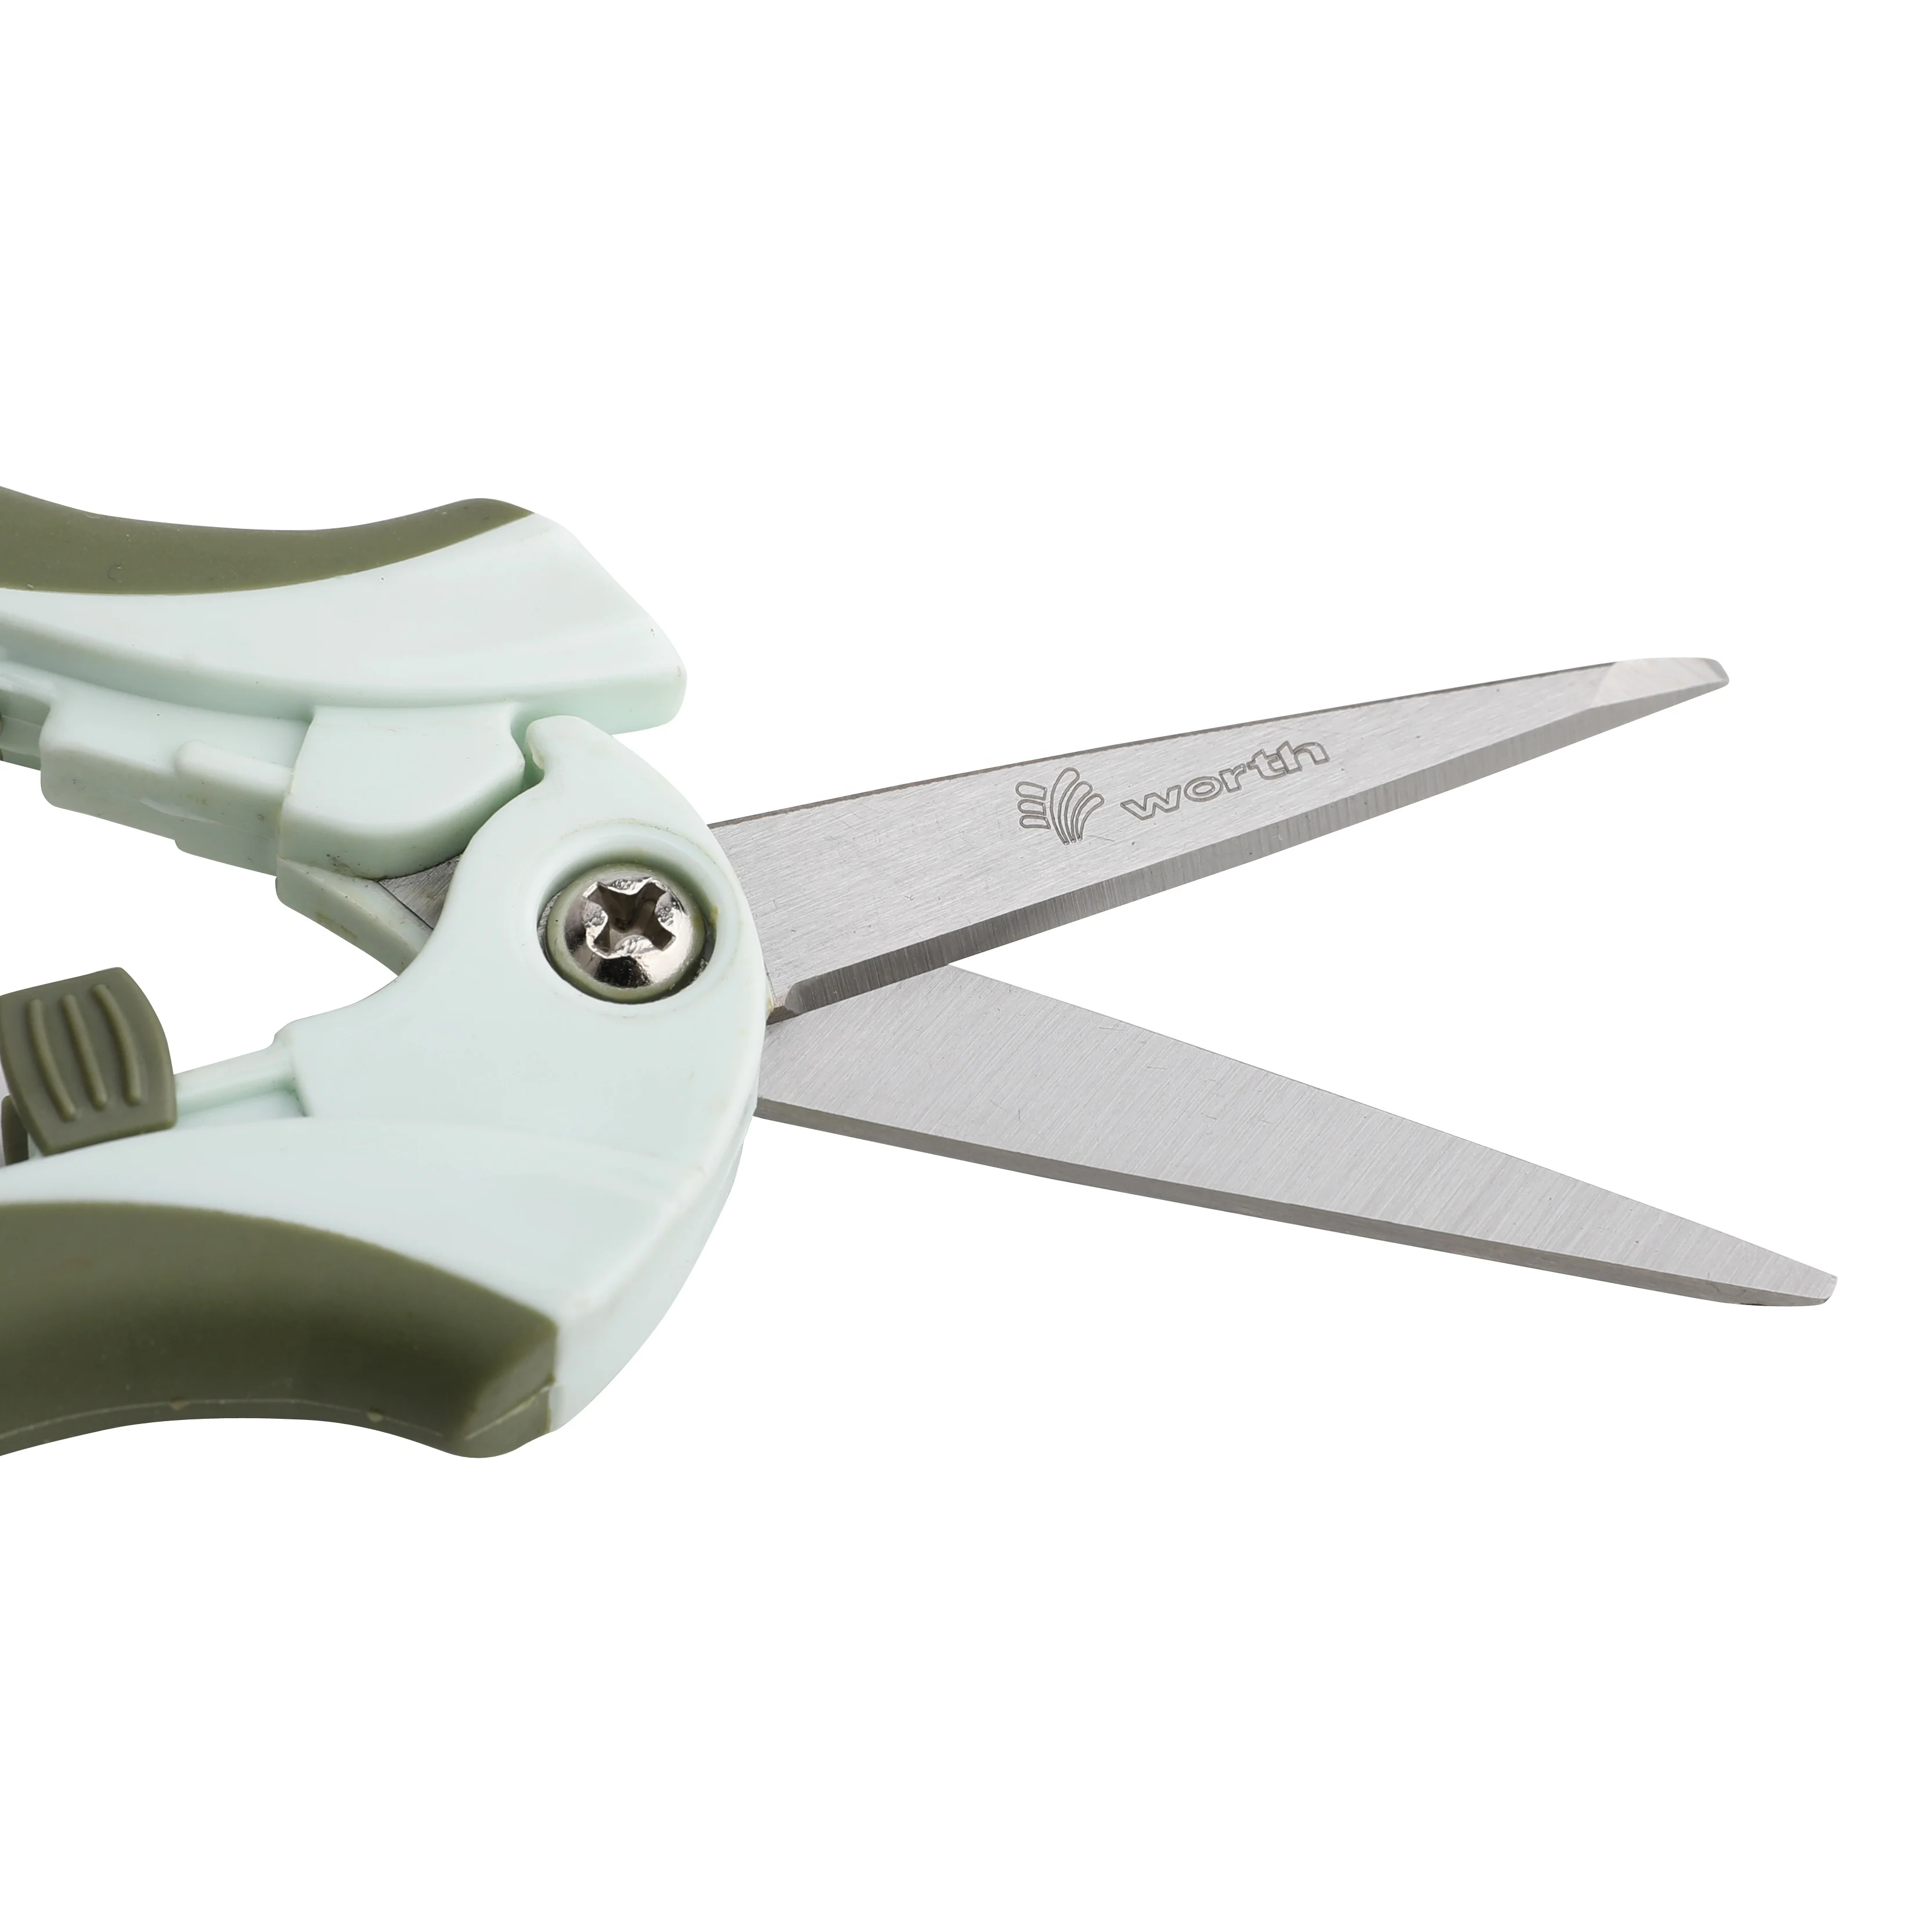 6 Inch Stainless Steel Blade ABS Handle Soft TPR Grip Gardening Flower Scissors Snips